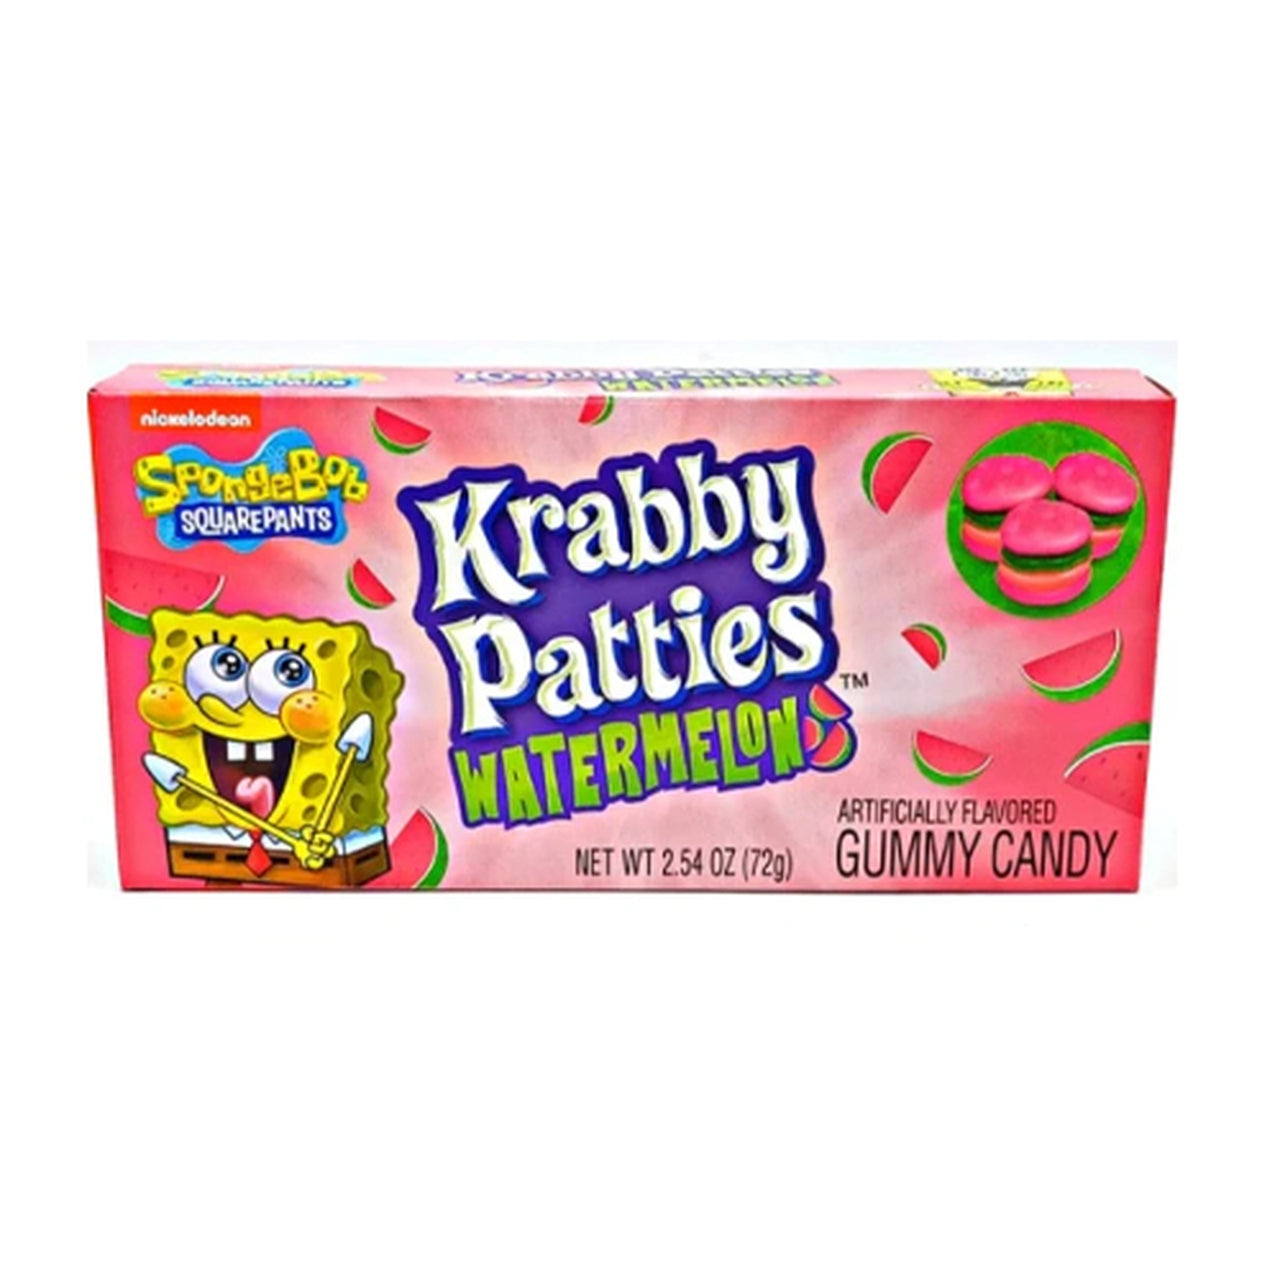 Krabby Patties Watermelon Patties -  Box 72G